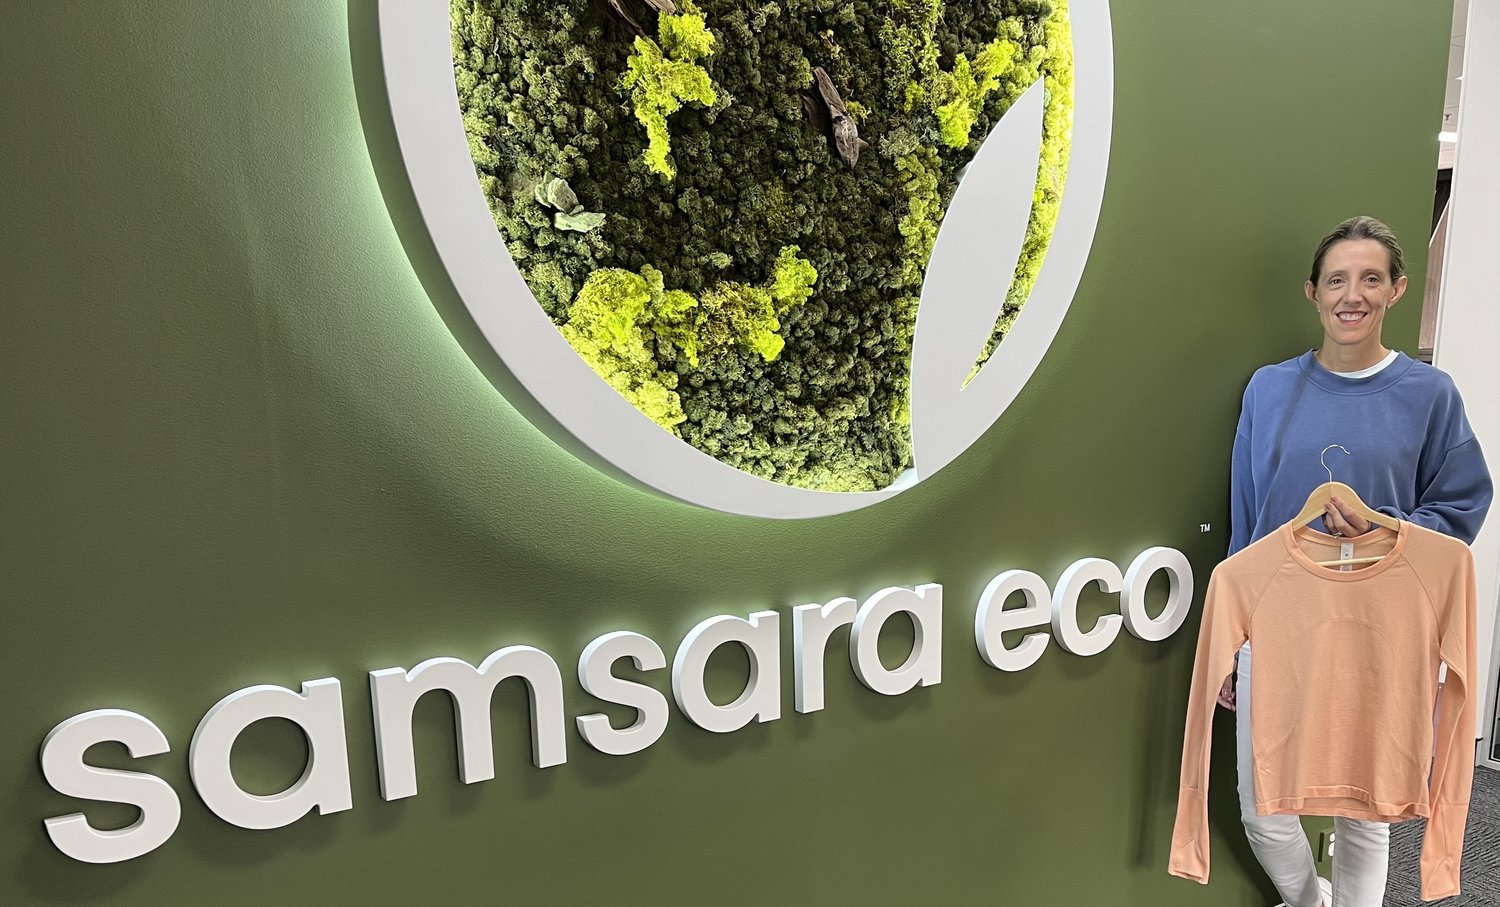 lululemon And Samsara Eco Unveil World’s First Enzymatically Recycled Nylon 6,6 Product